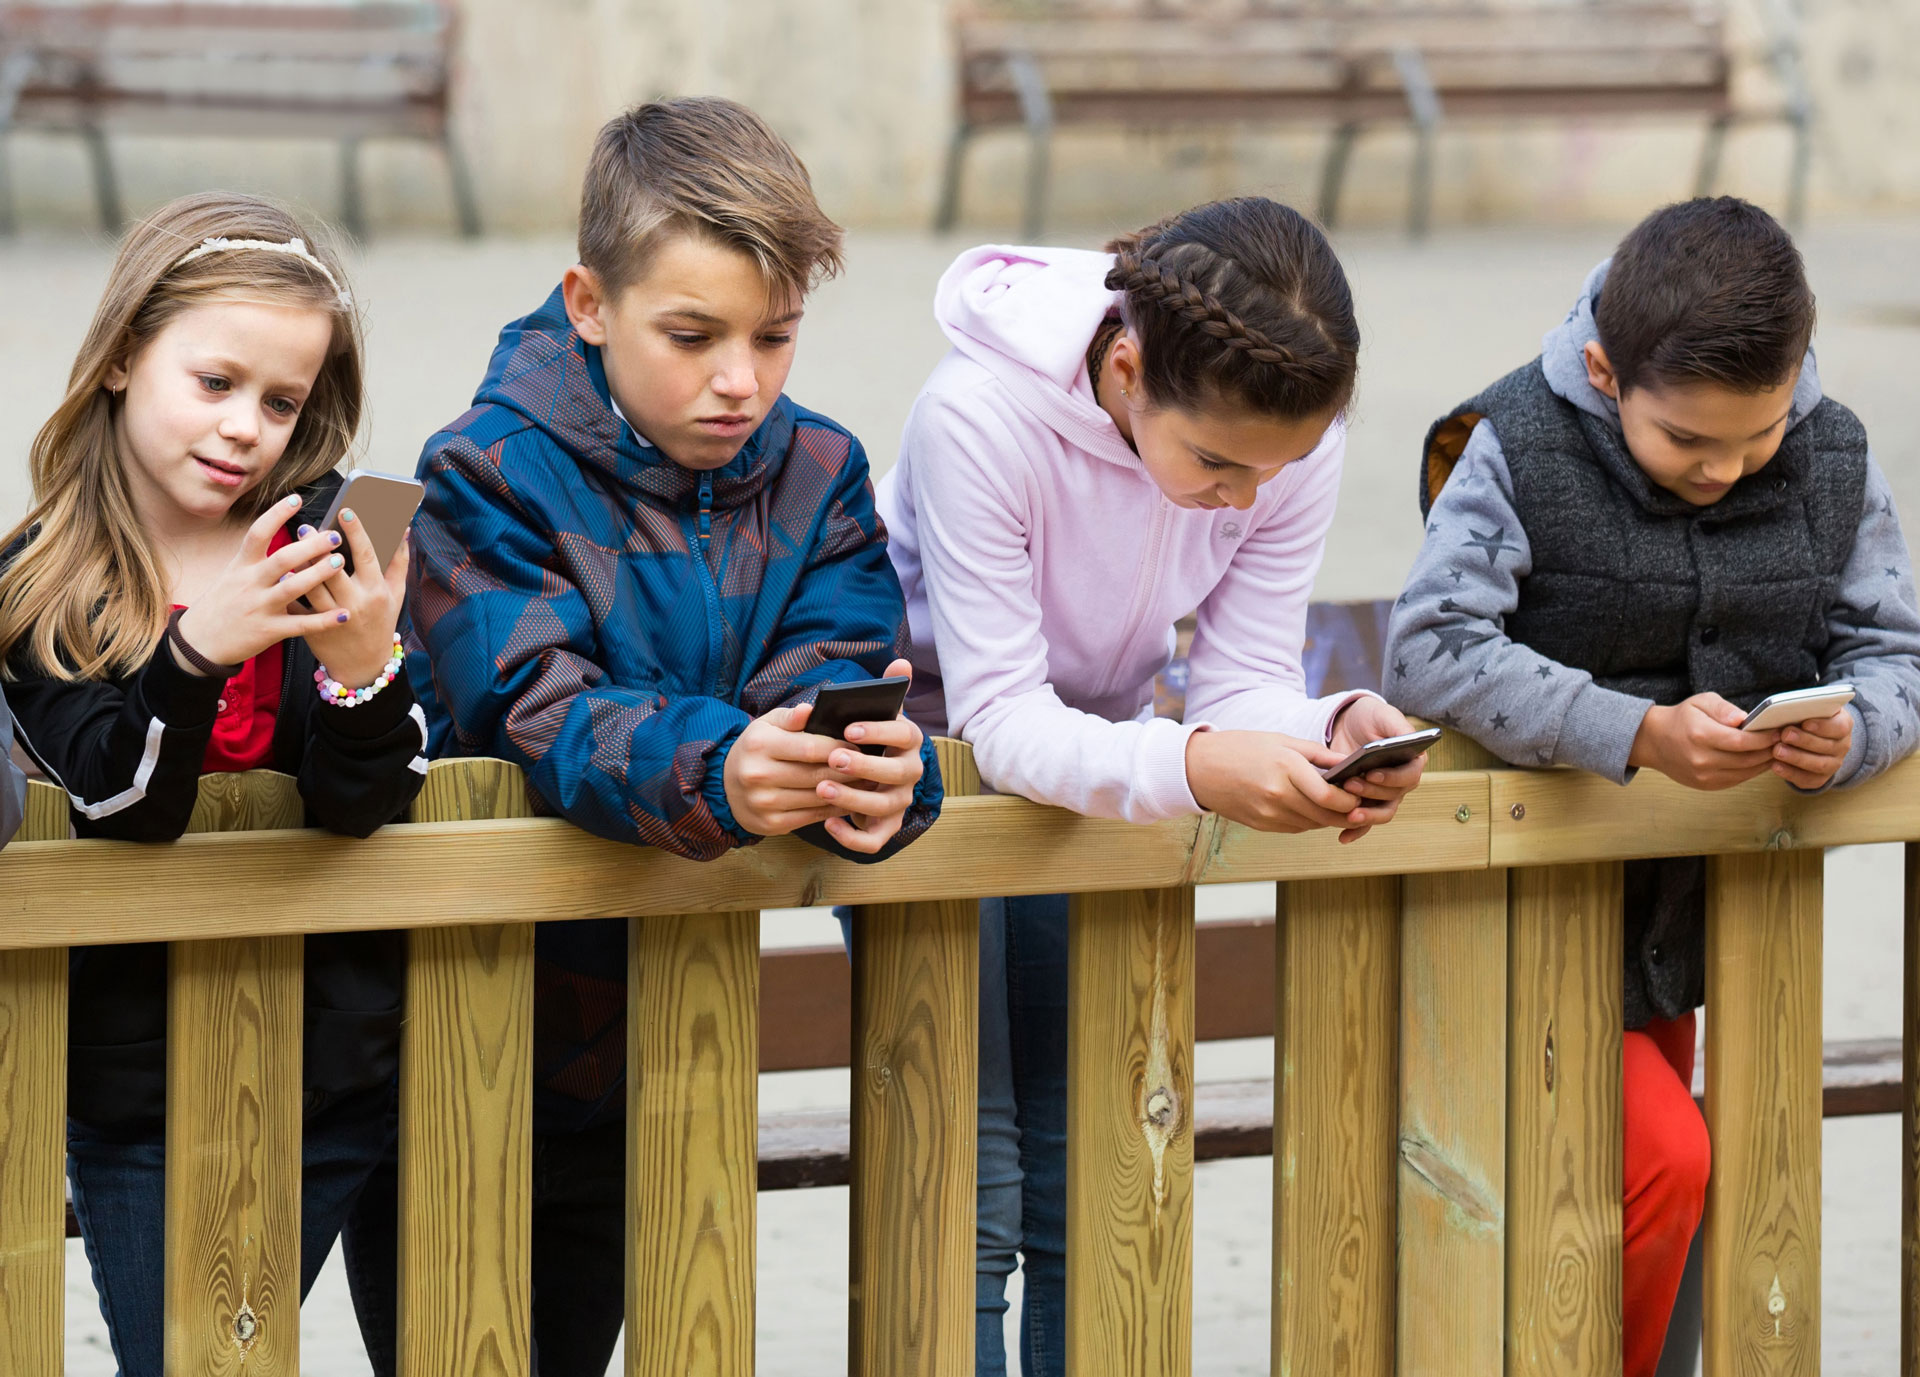 smartphone-addiction-children